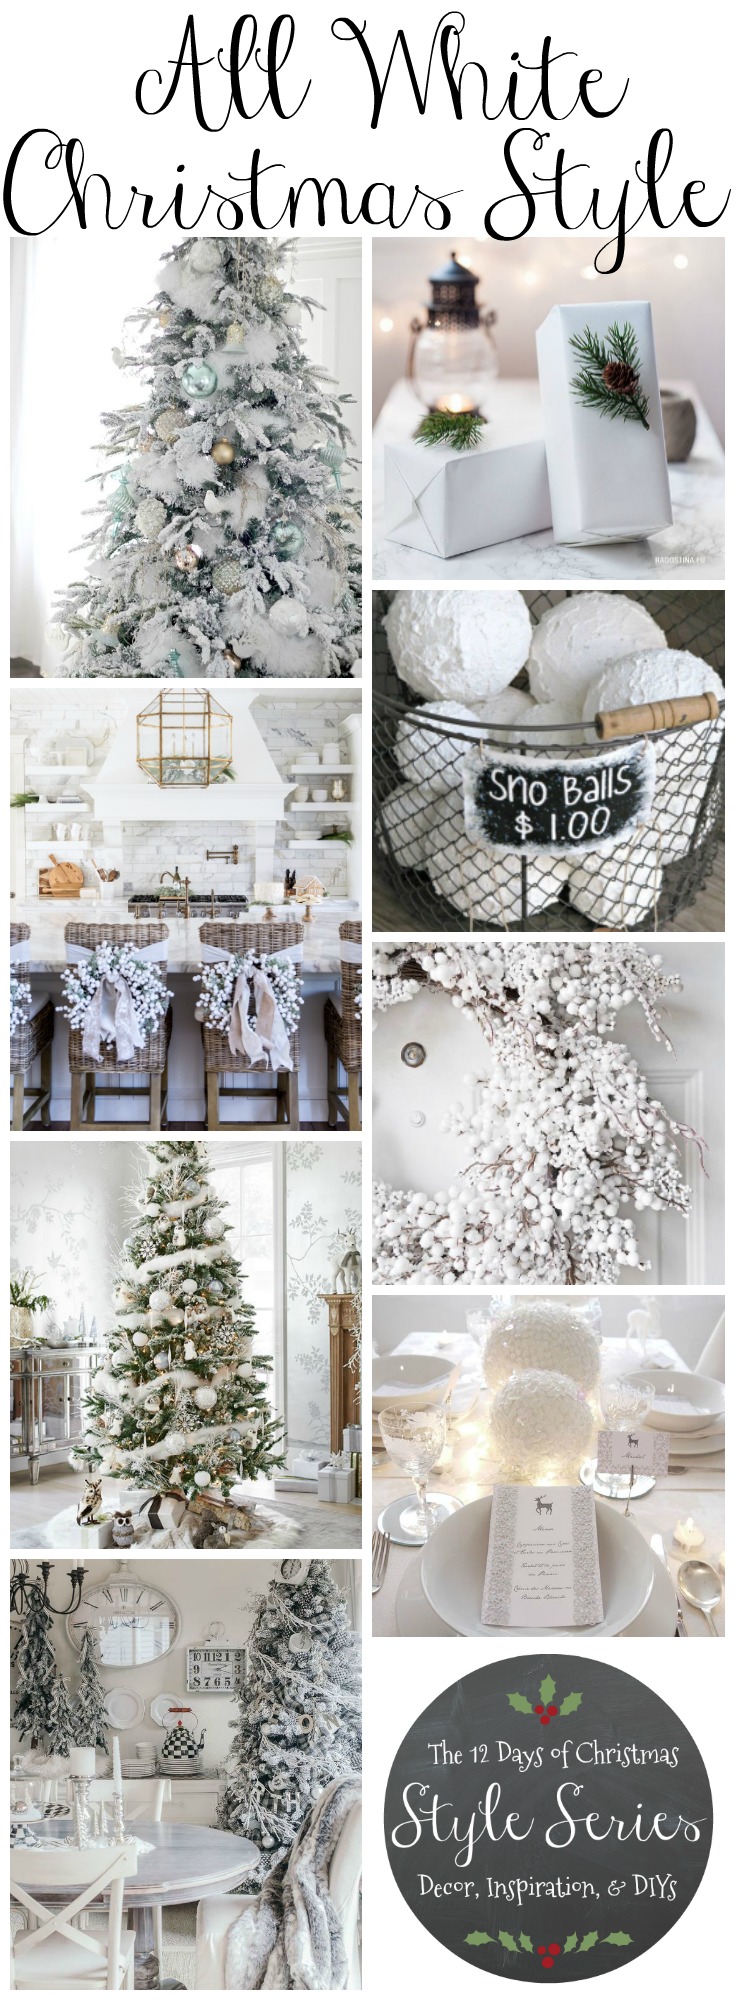 all-white-christmas-style-winter-wonderland-all-white-christmas-decor-inspiration-and-diys